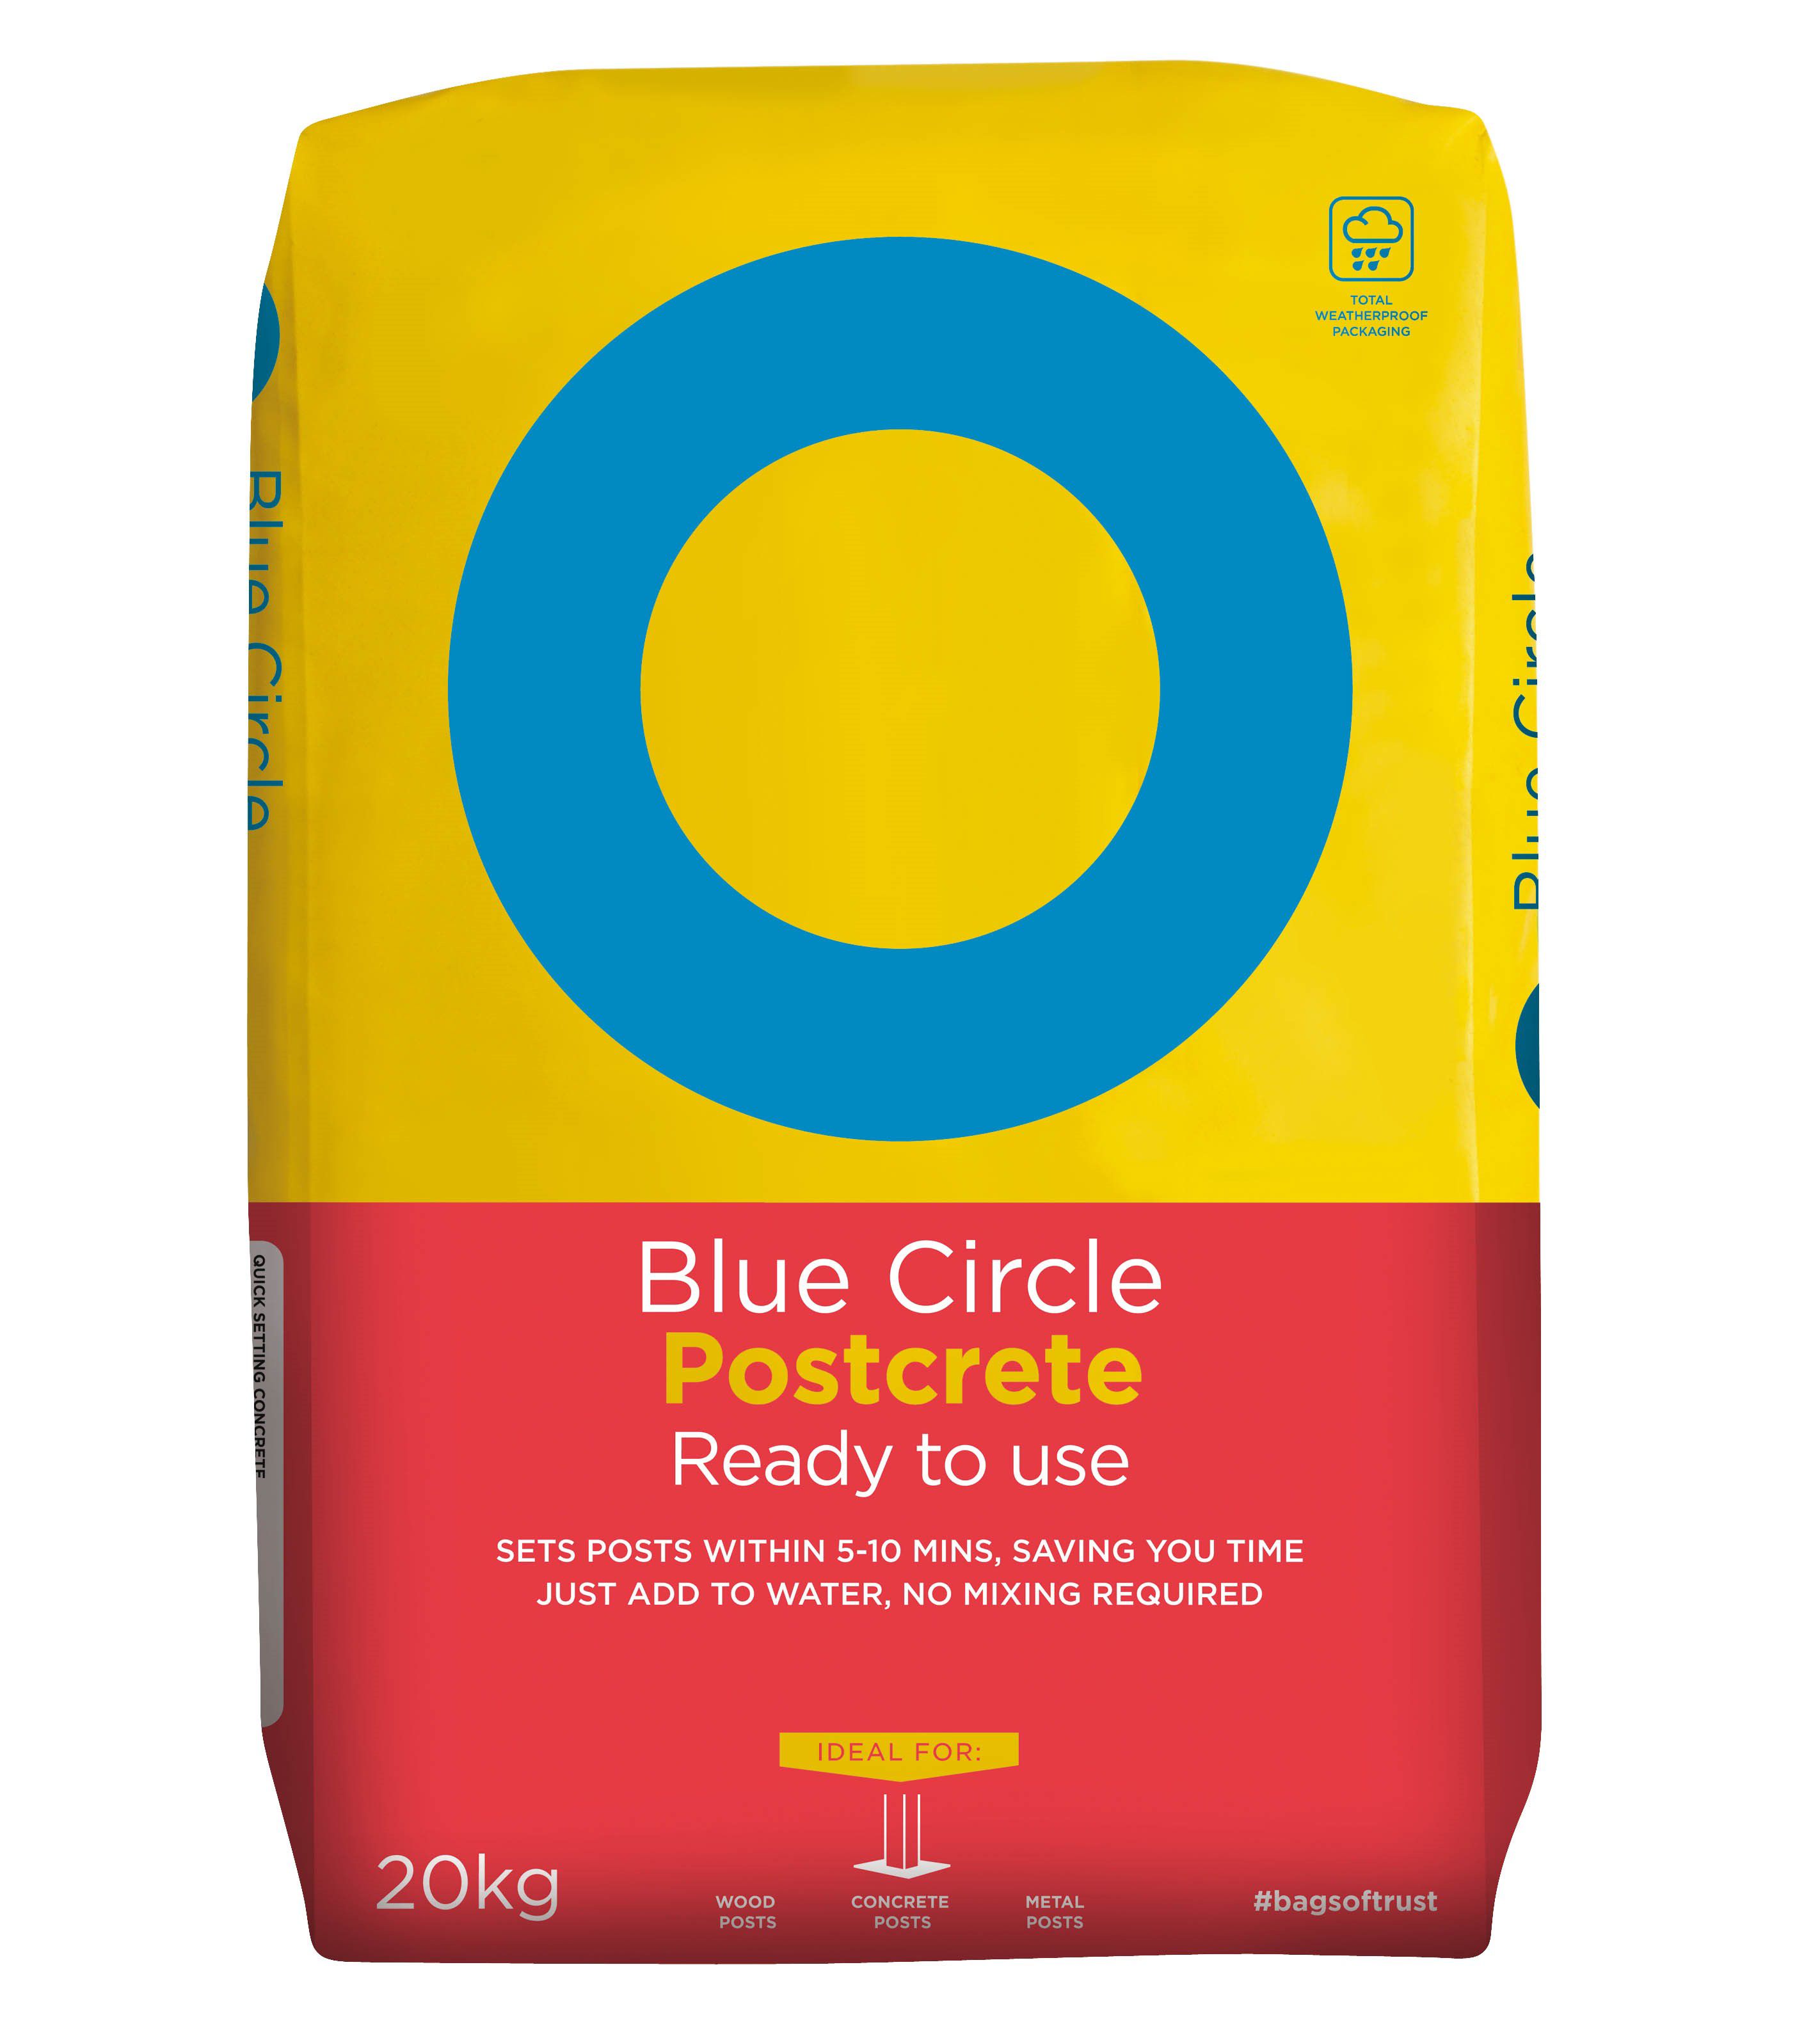 Blue Circle Postcrete Ready to use Concrete 20kg Bag | Departments